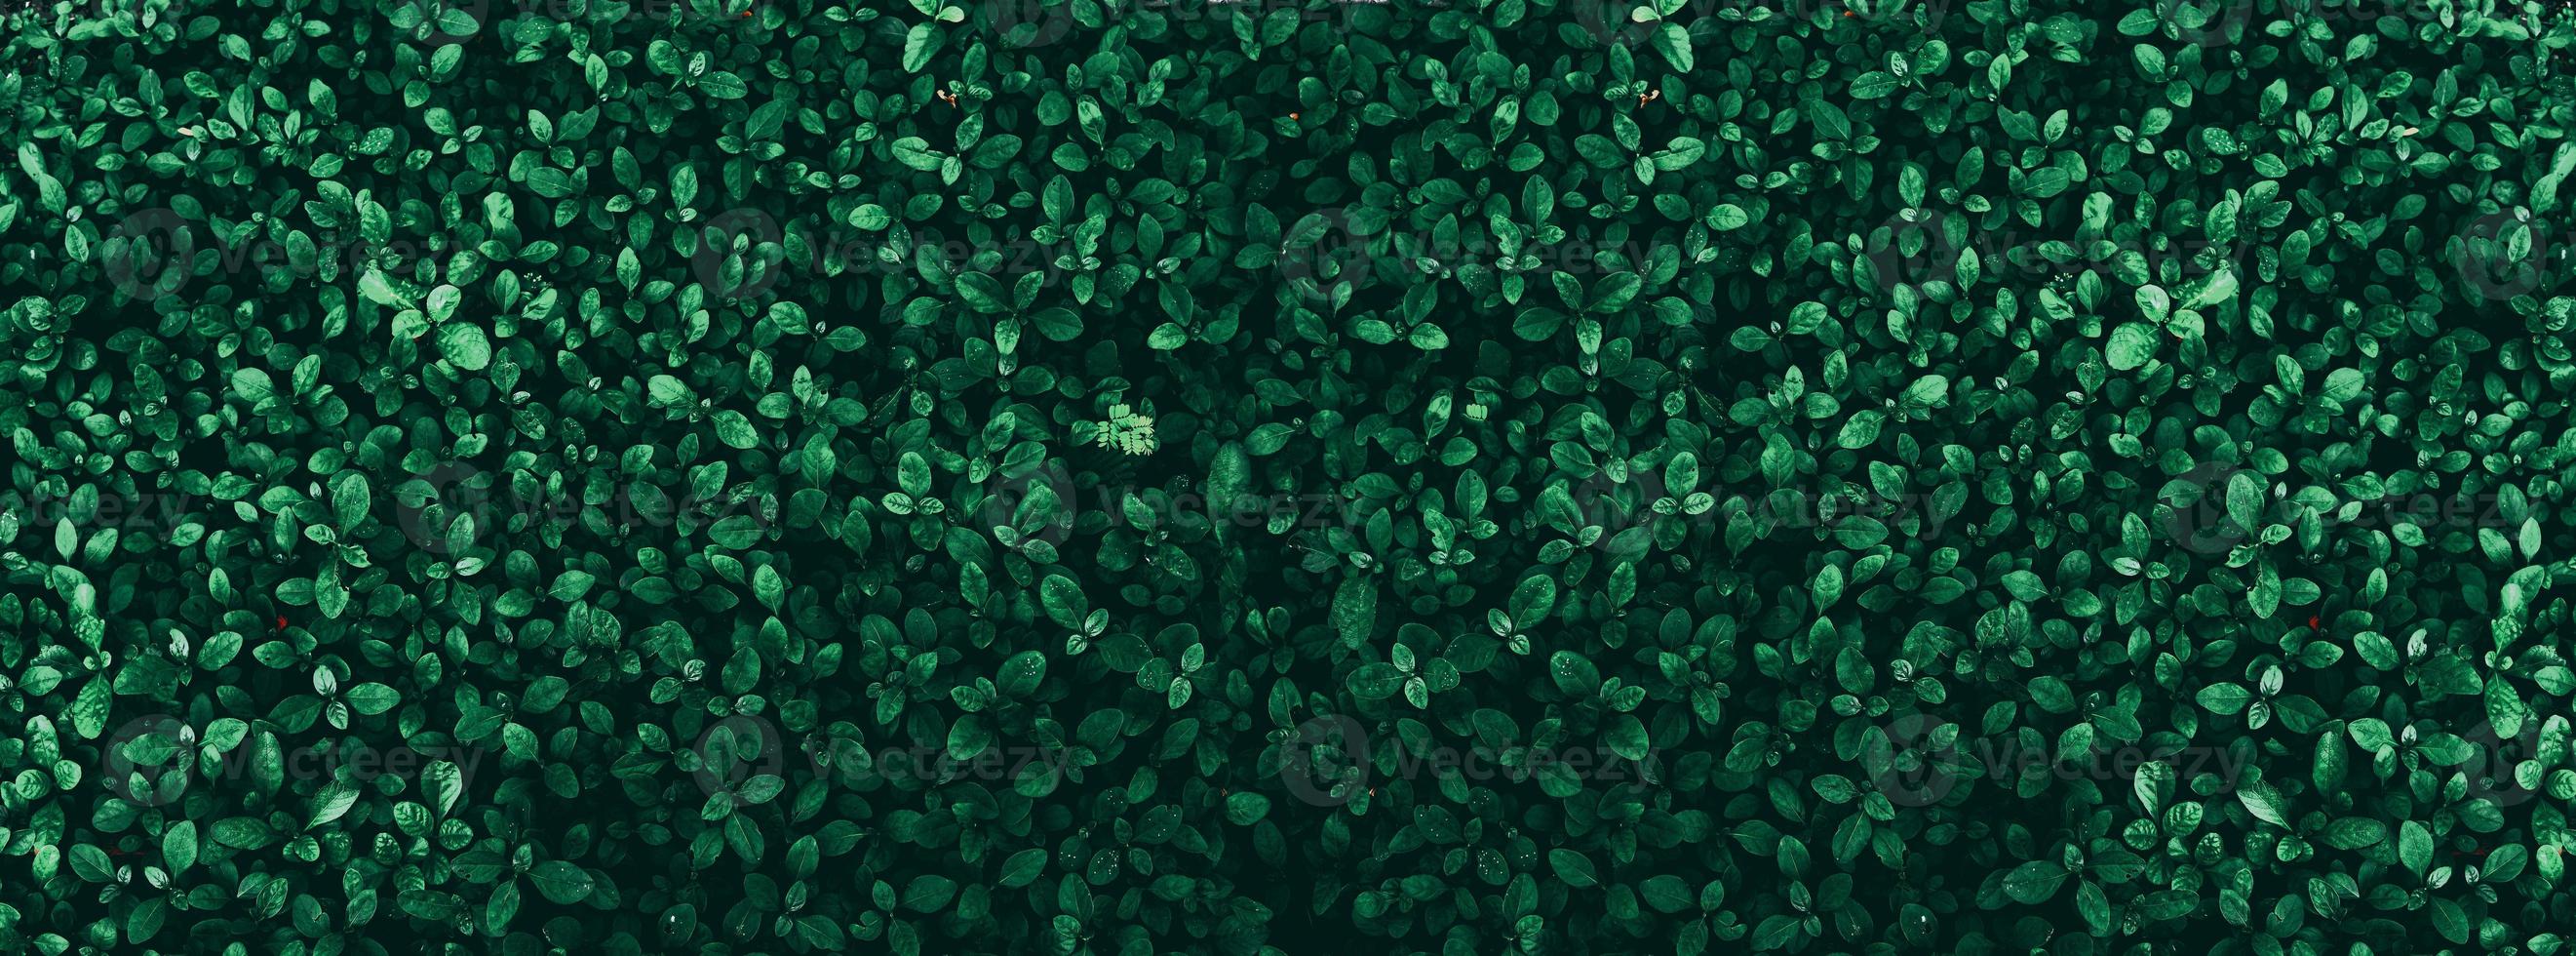 fondo de hoja verde tropical tema de tono oscuro foto